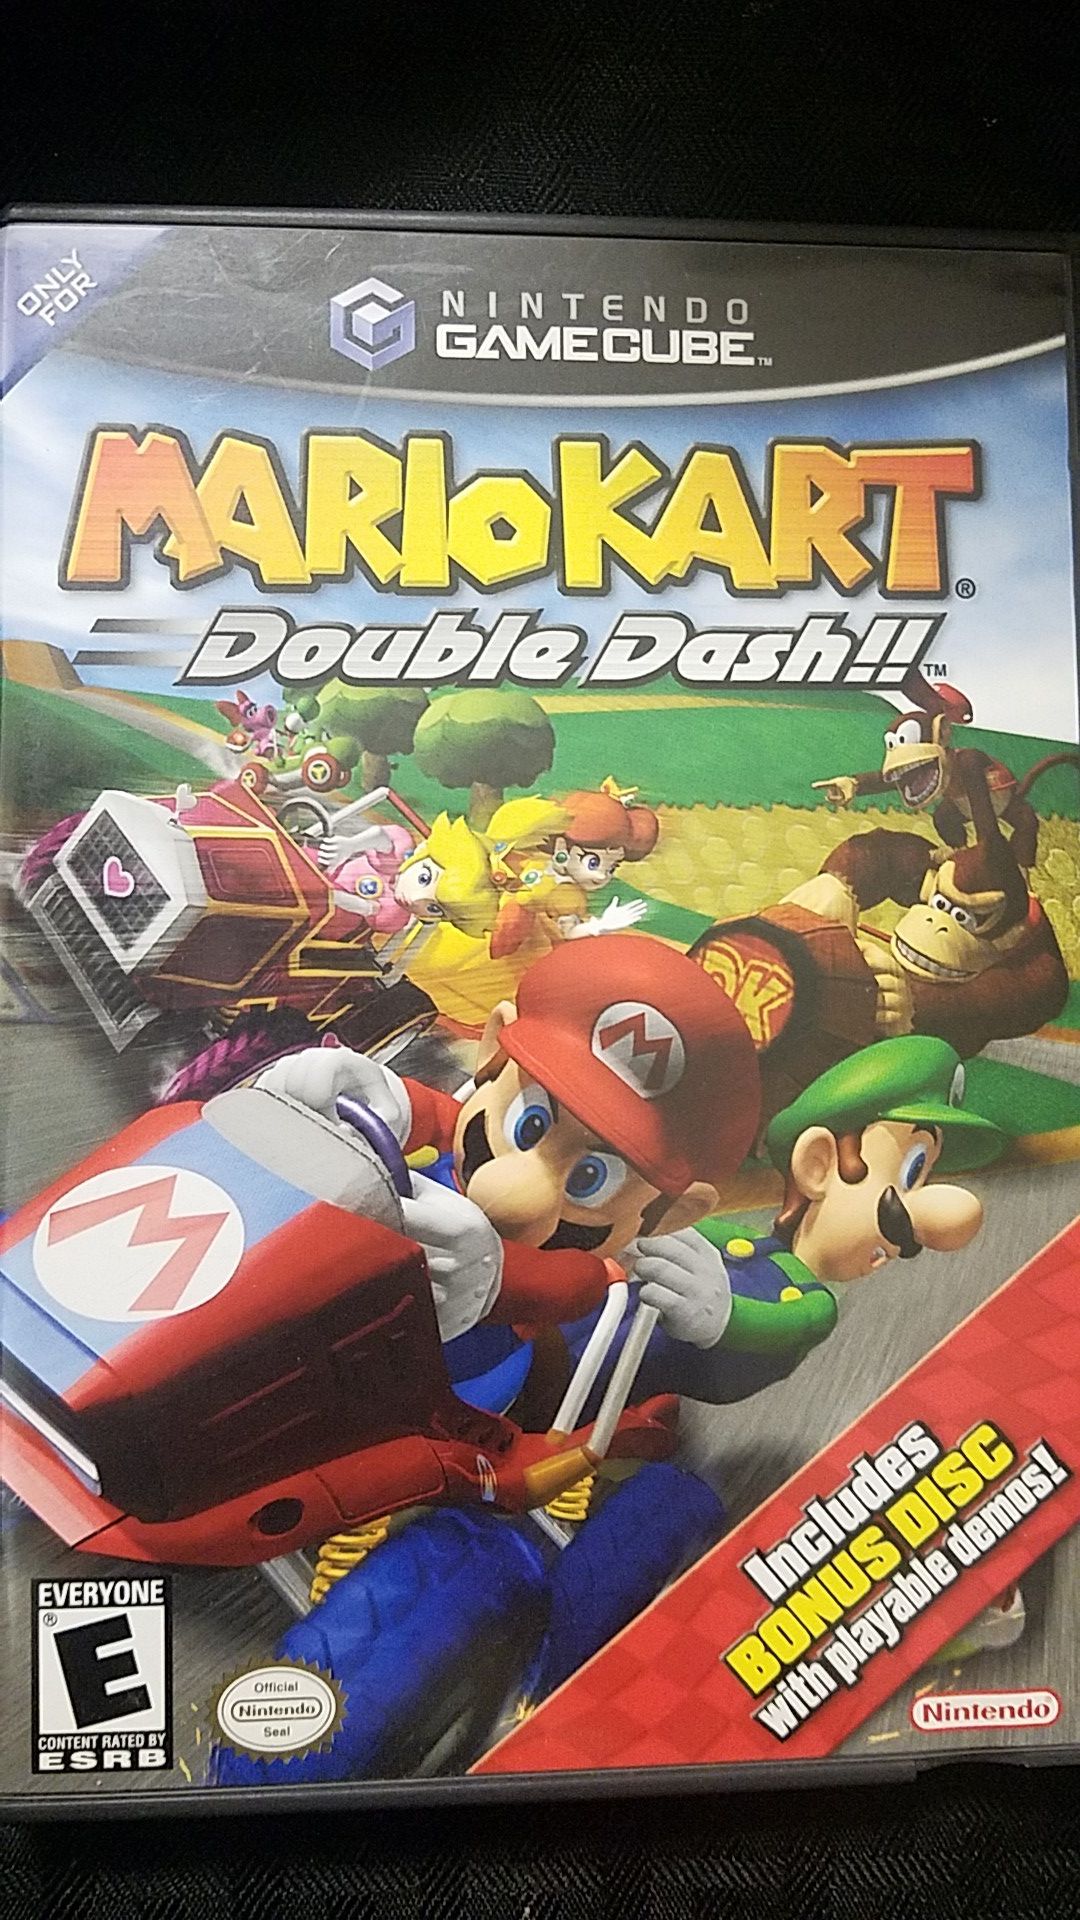 Gamecube Mario Kart Double Dash game